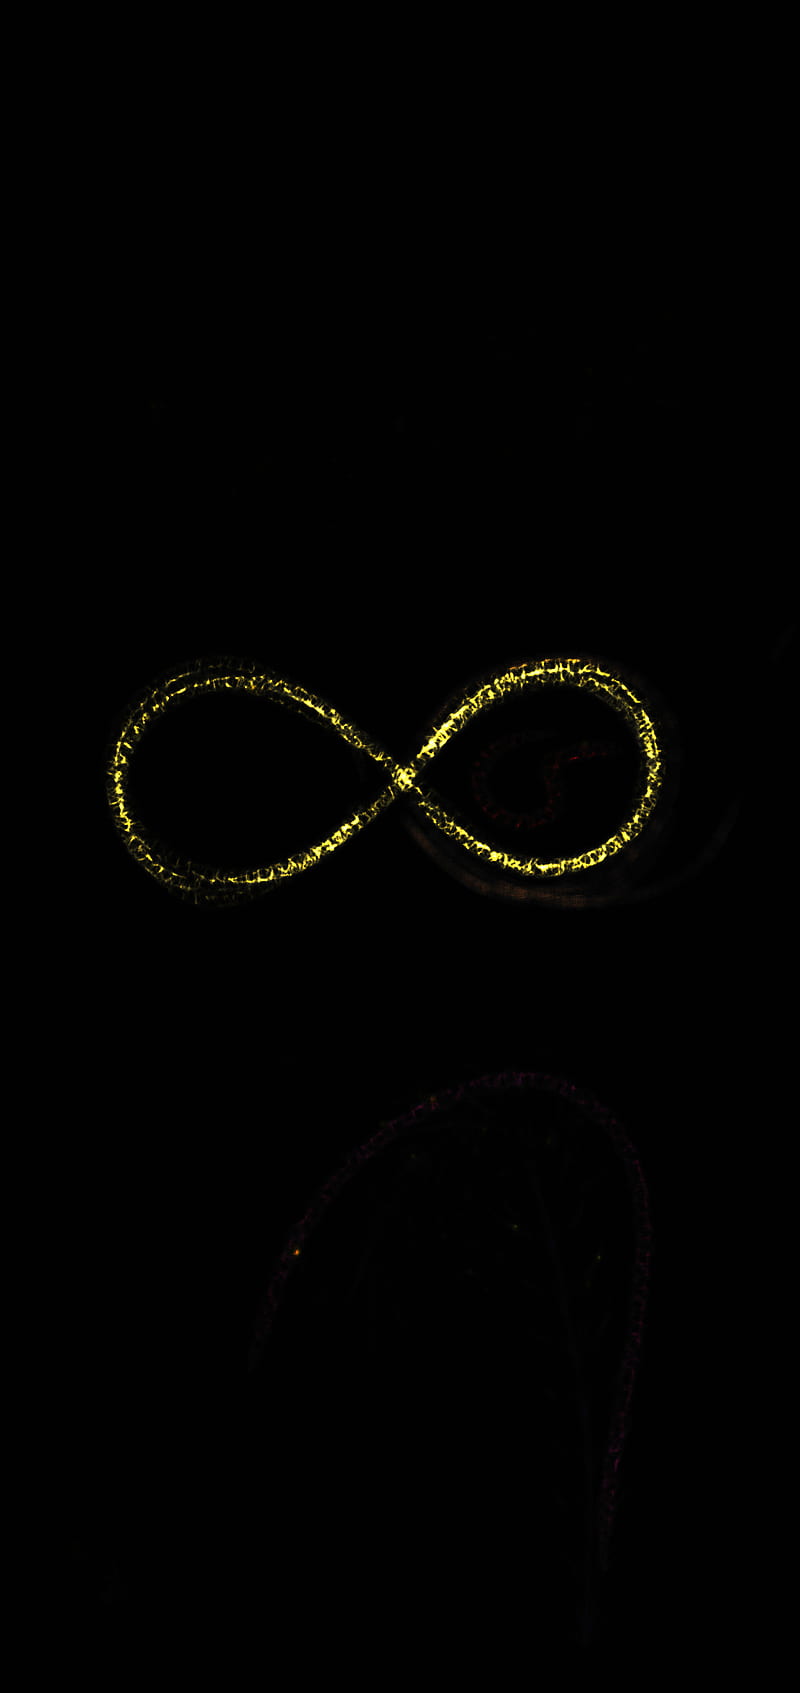 infinity symbol love wallpaper